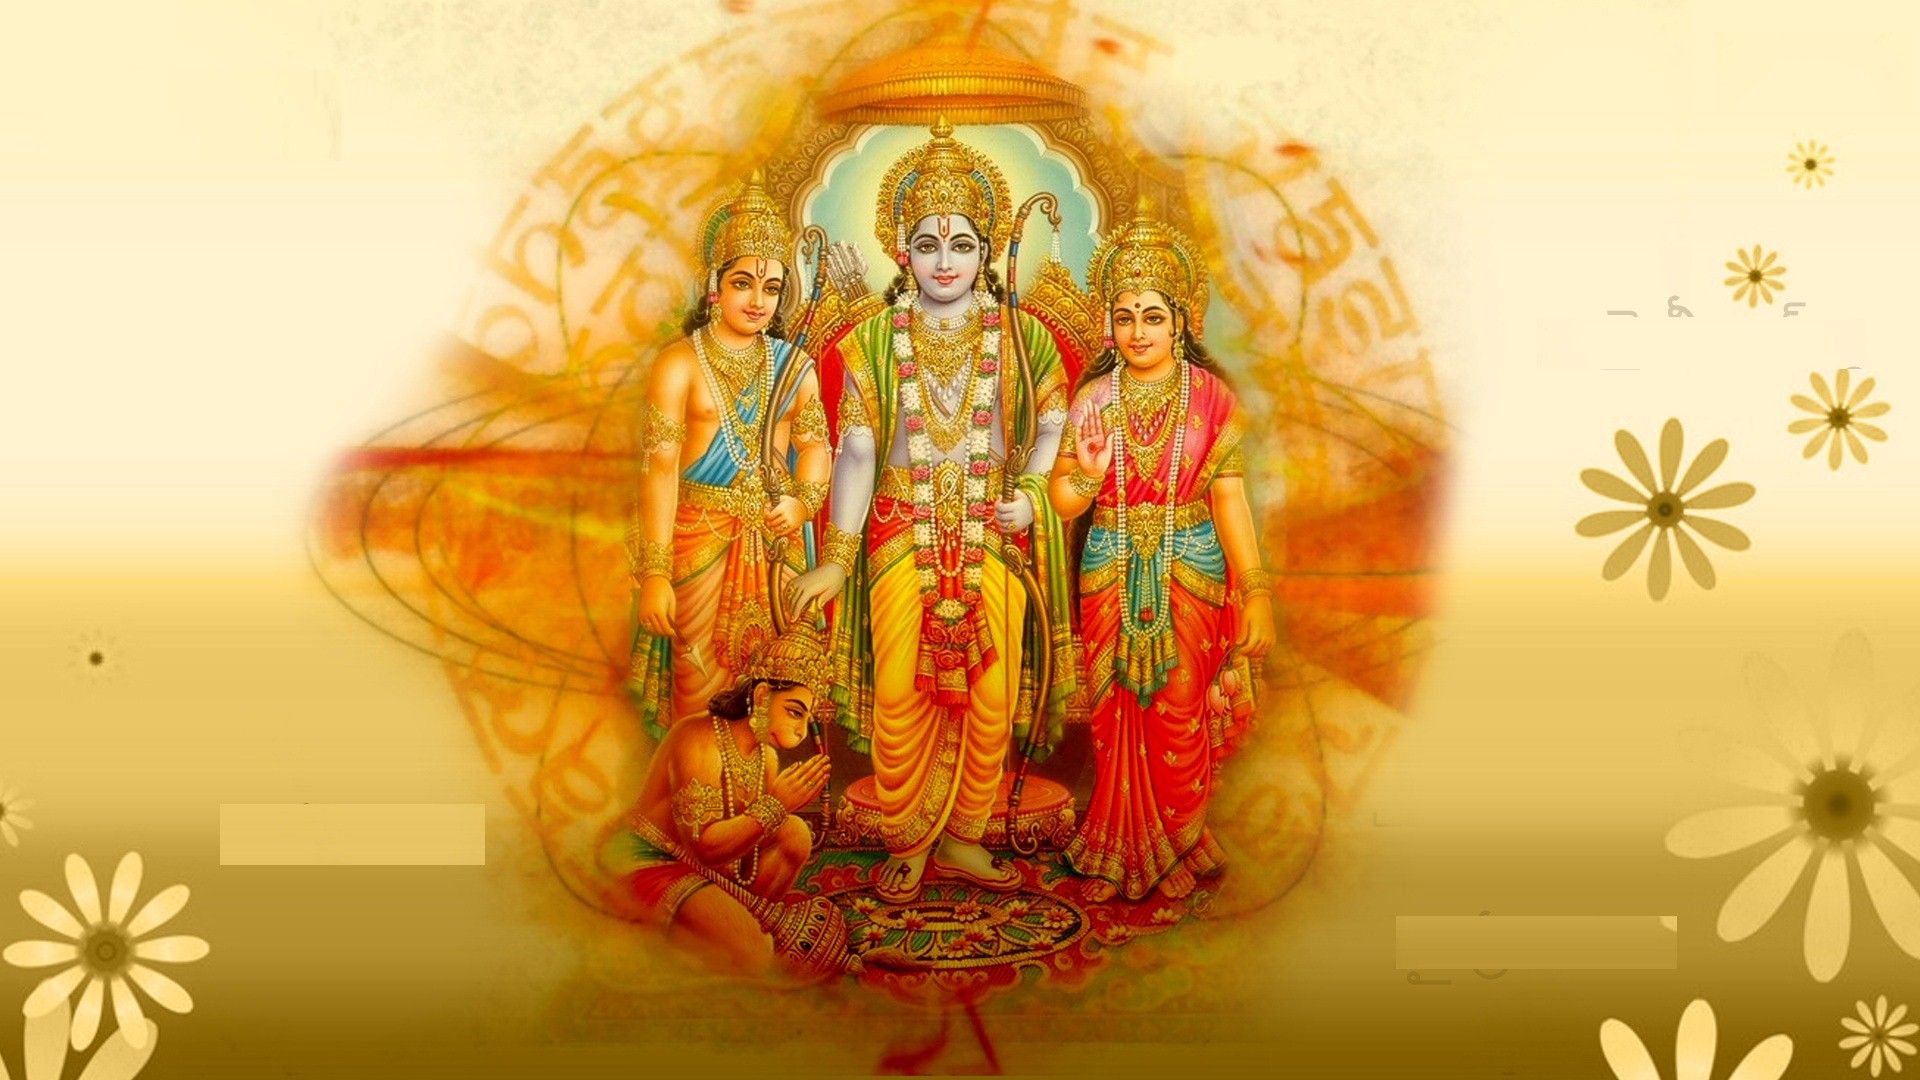 God Rama Laxman Sita with Hanuman